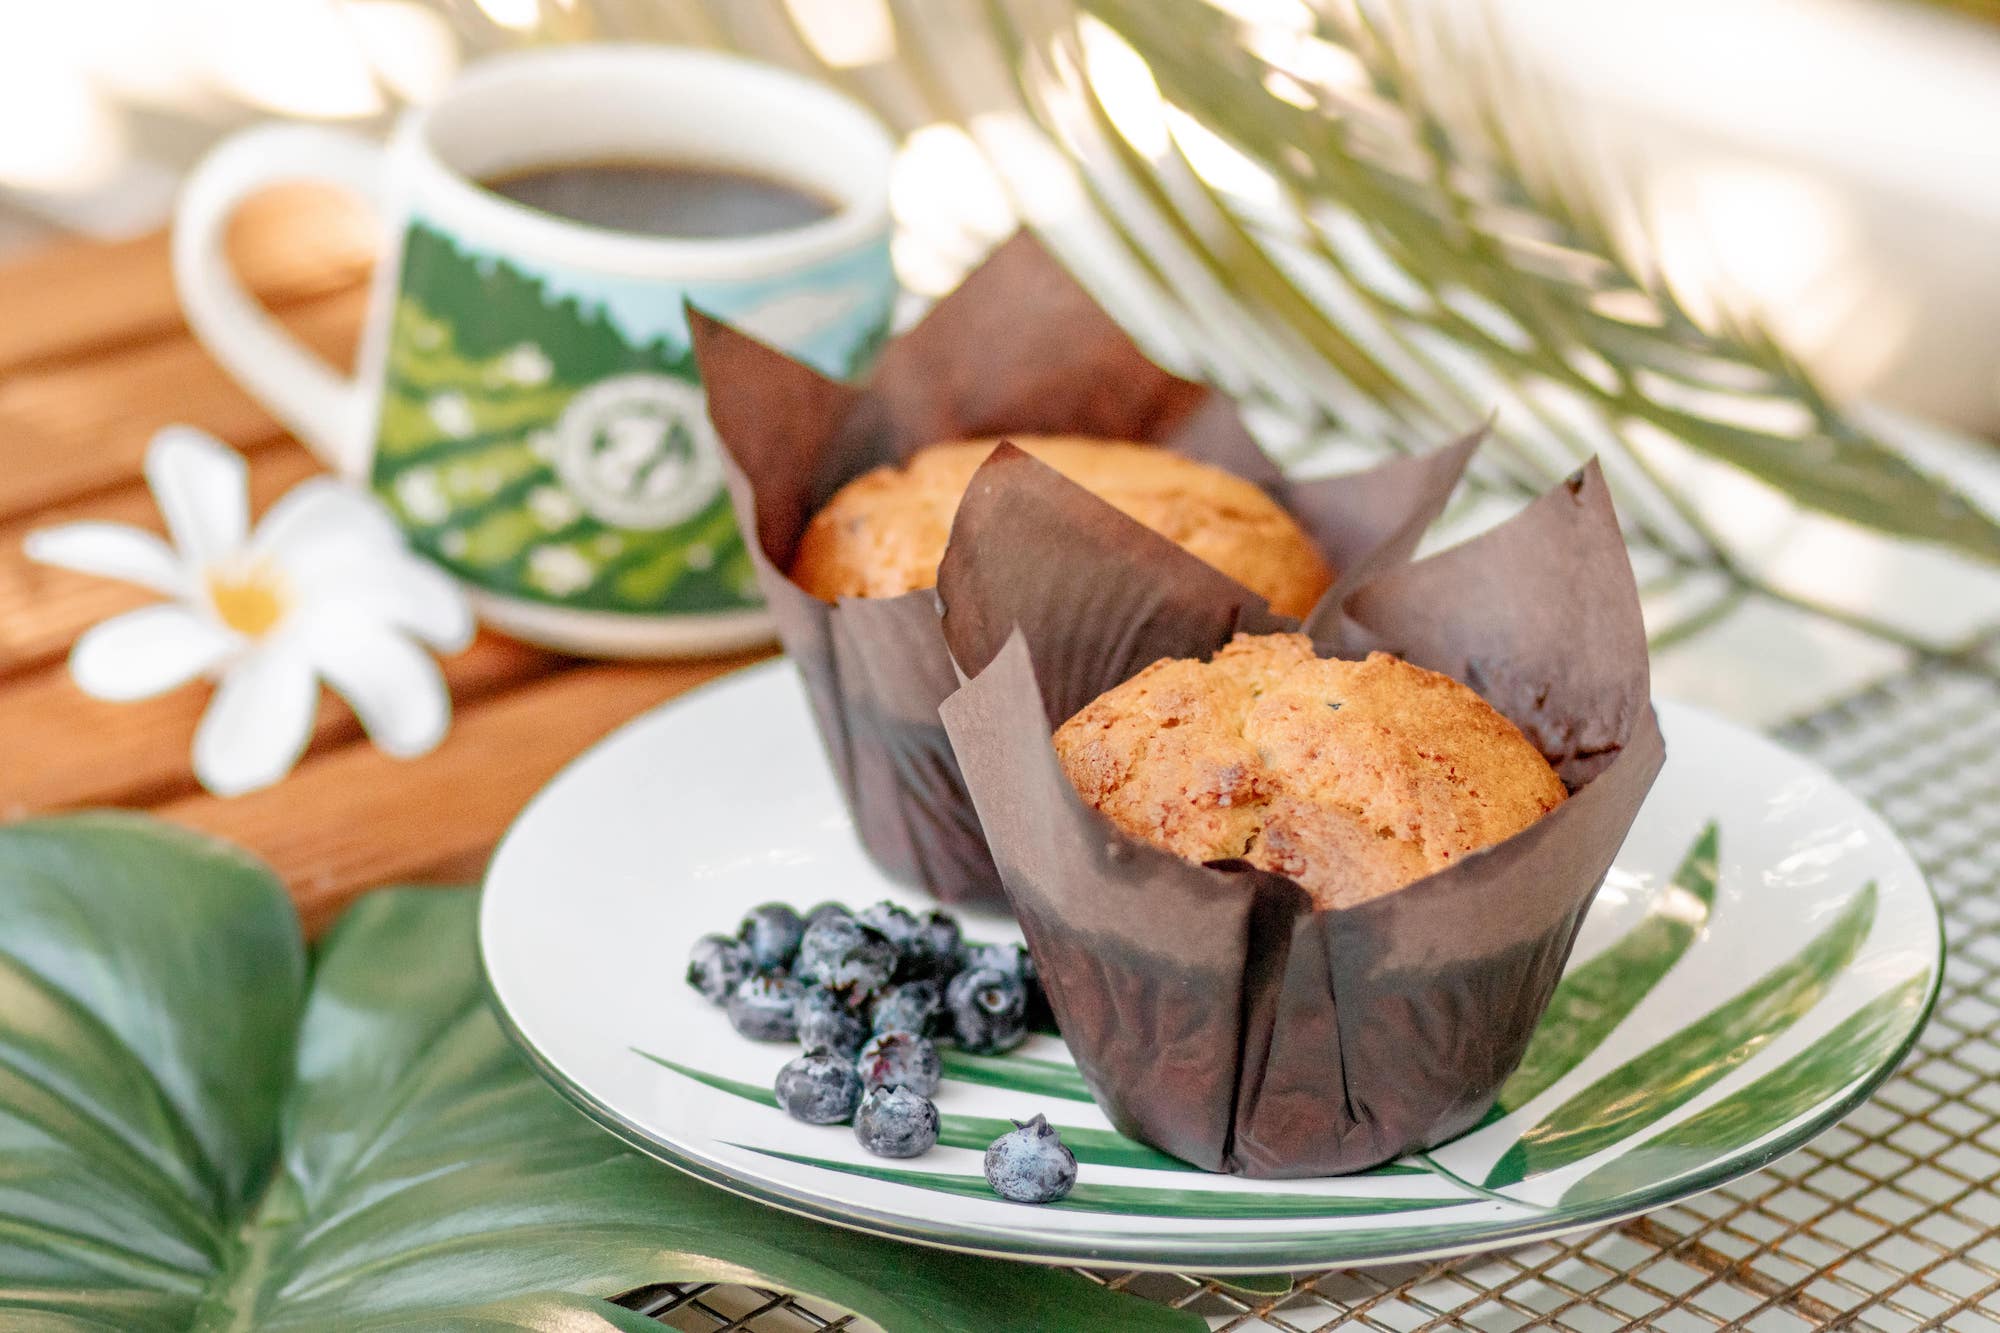 Honolulu Coffee's new seasonal blueberry corn muffin and a cup of Kona coffee